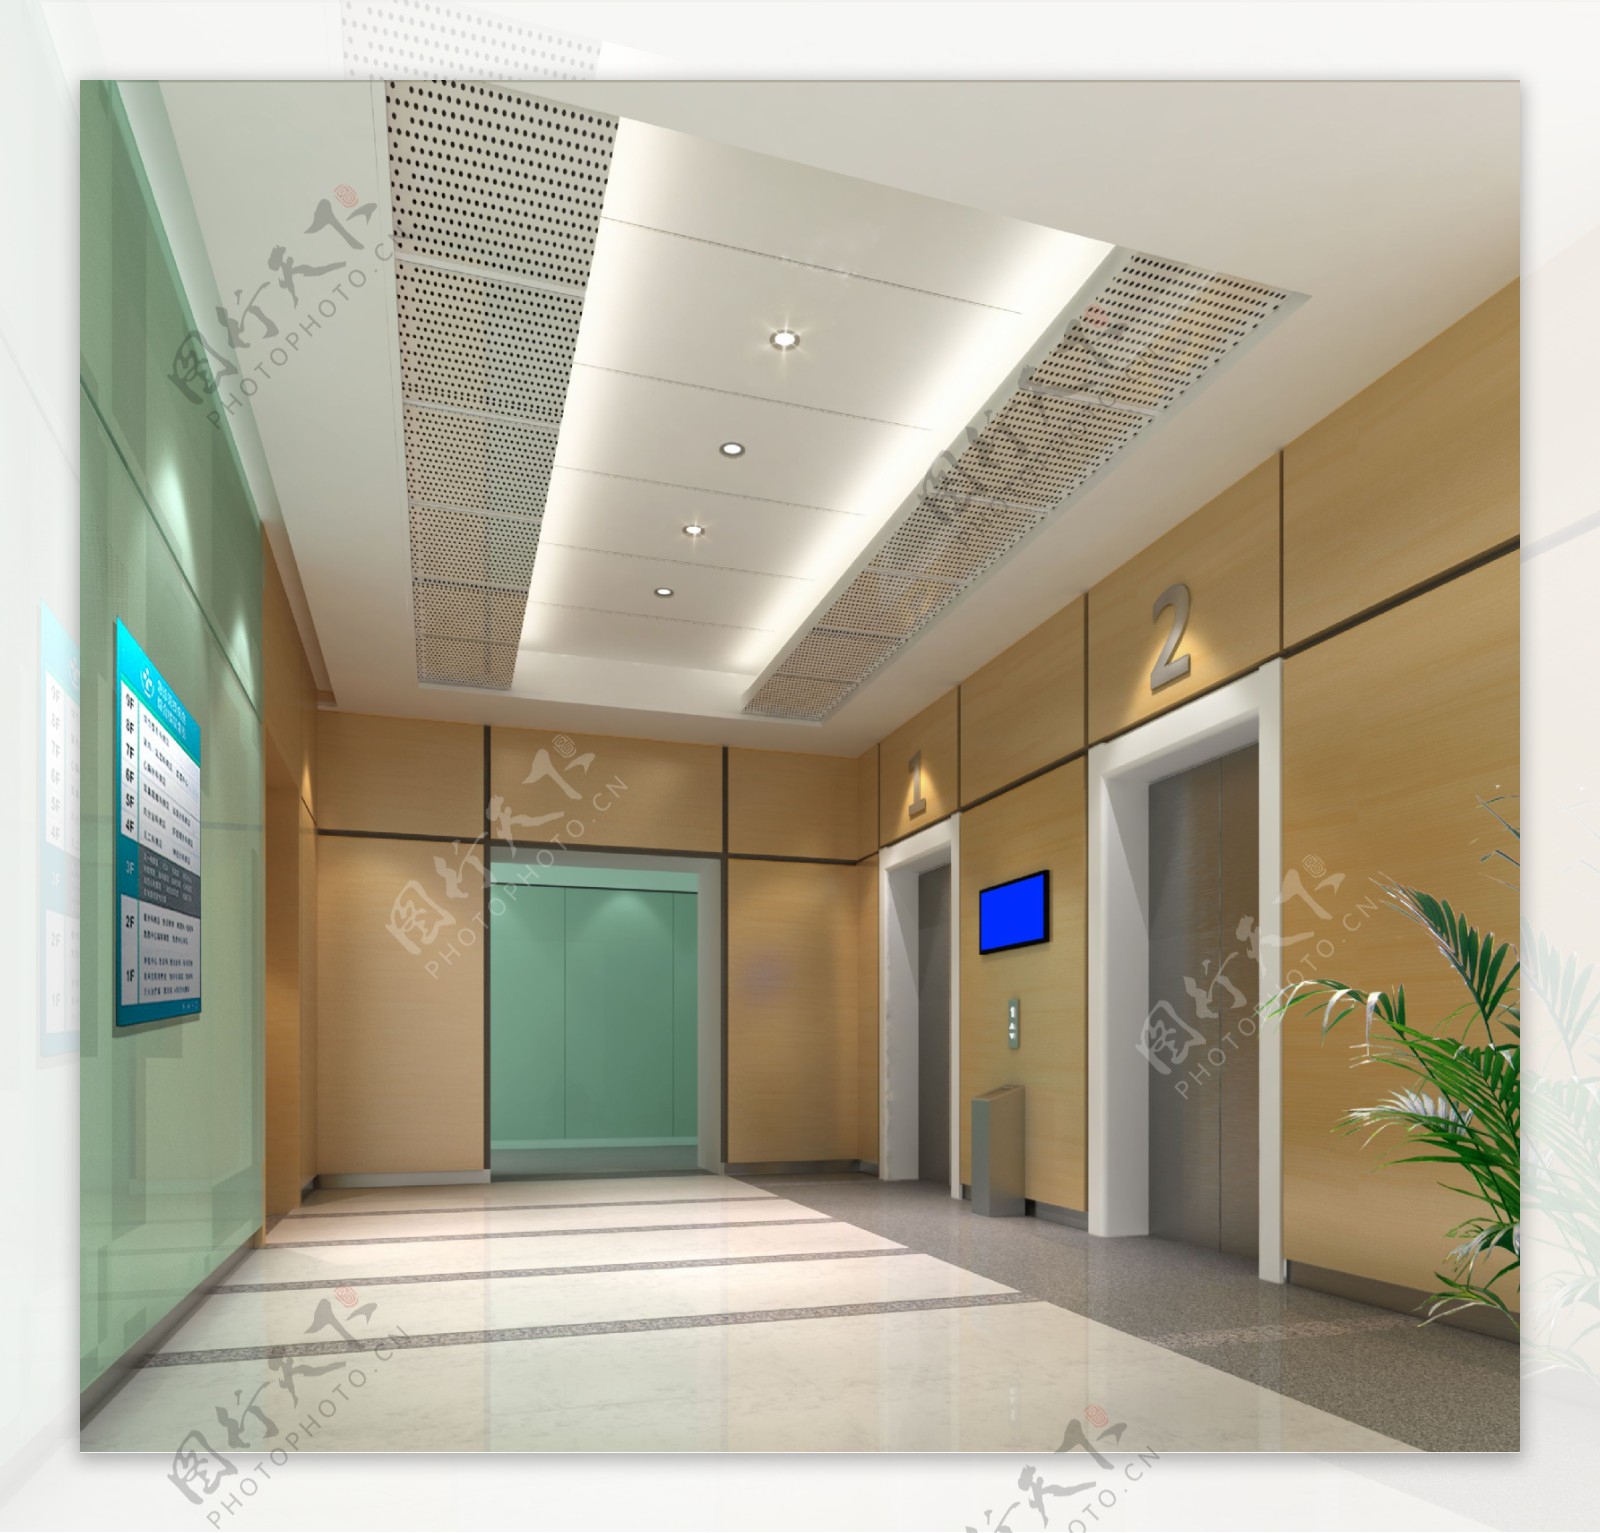 xsth-05-电梯装饰效果图-北京新生泰和电梯装饰有限公司11